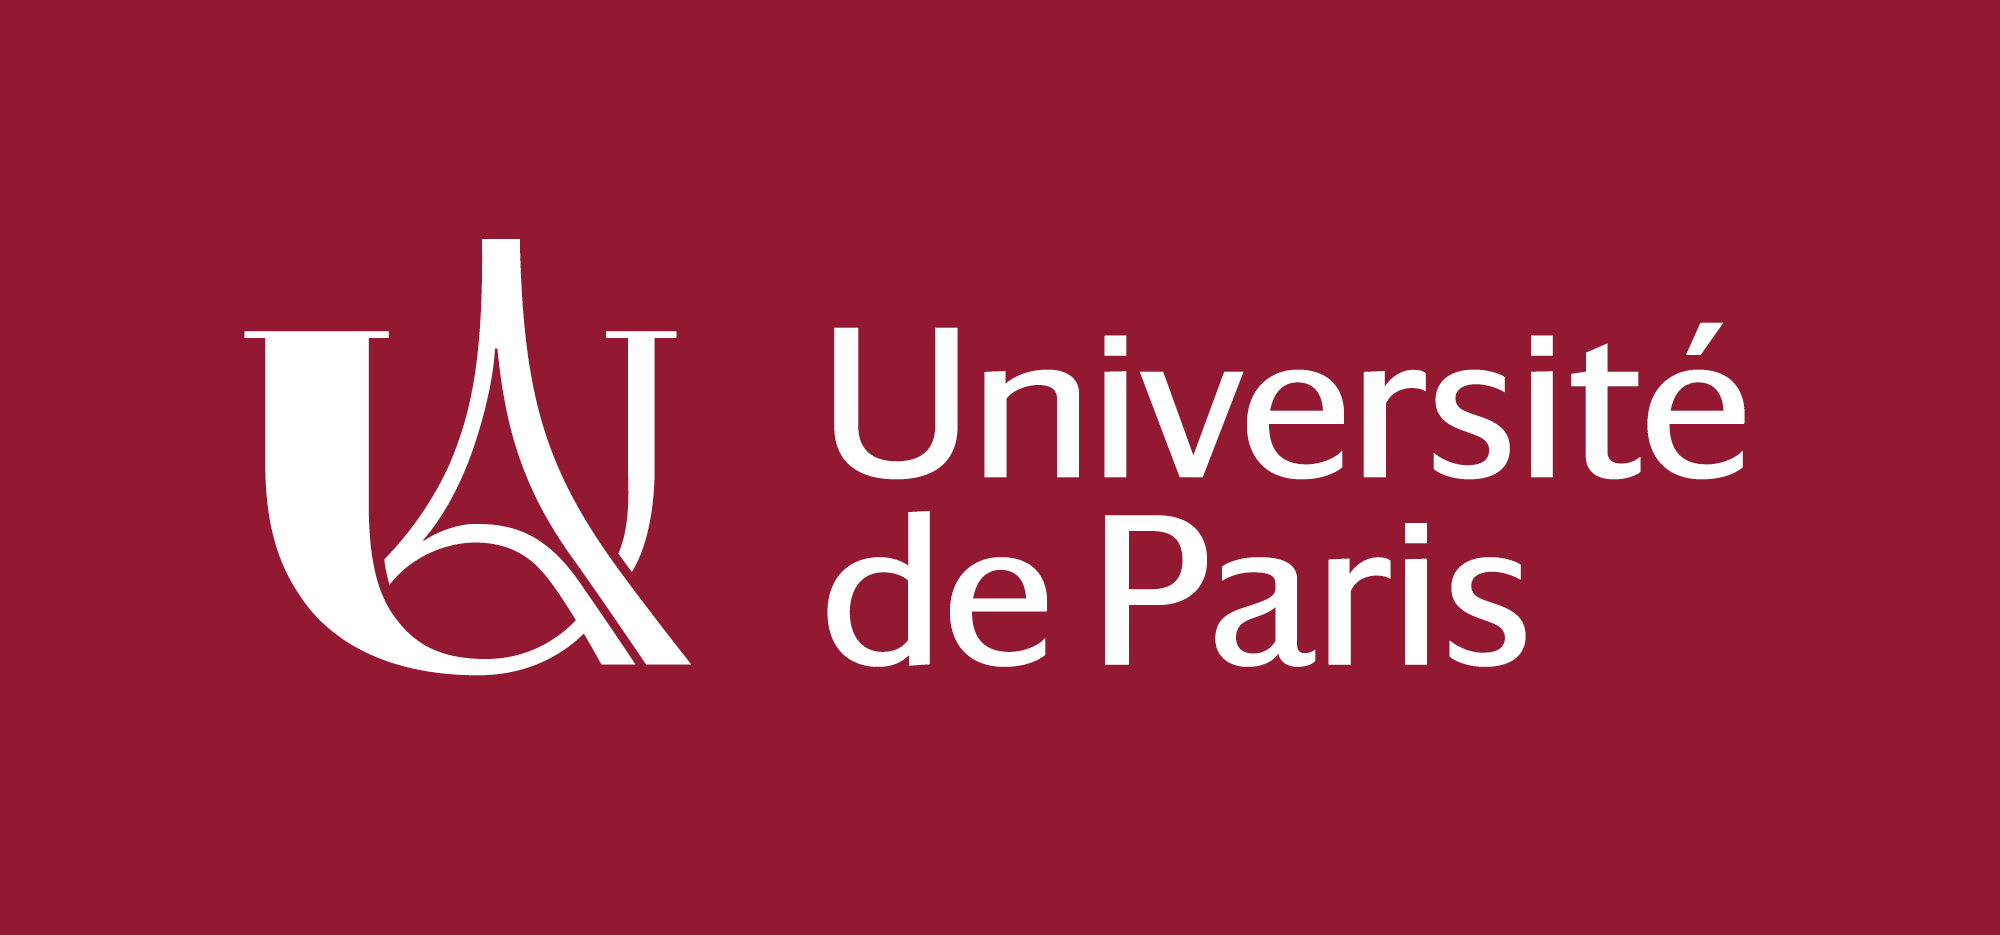 universite_de_paris_logo